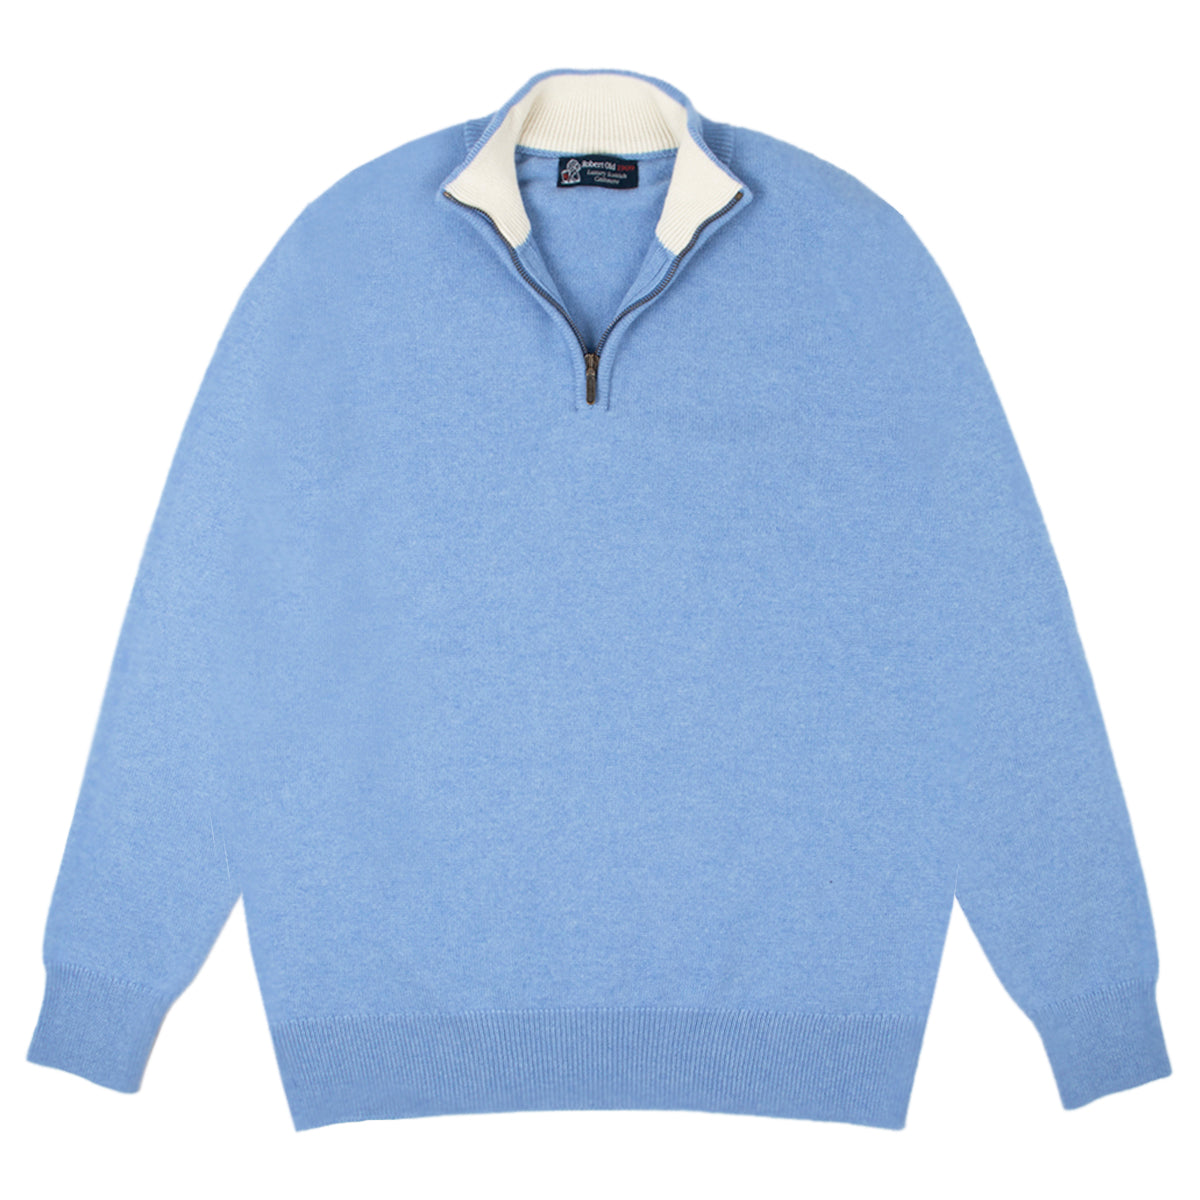 The Bowmore 1/4 Zip Neck Cashmere Sweater - Lapis Suez / White Undyed  Robert Old   